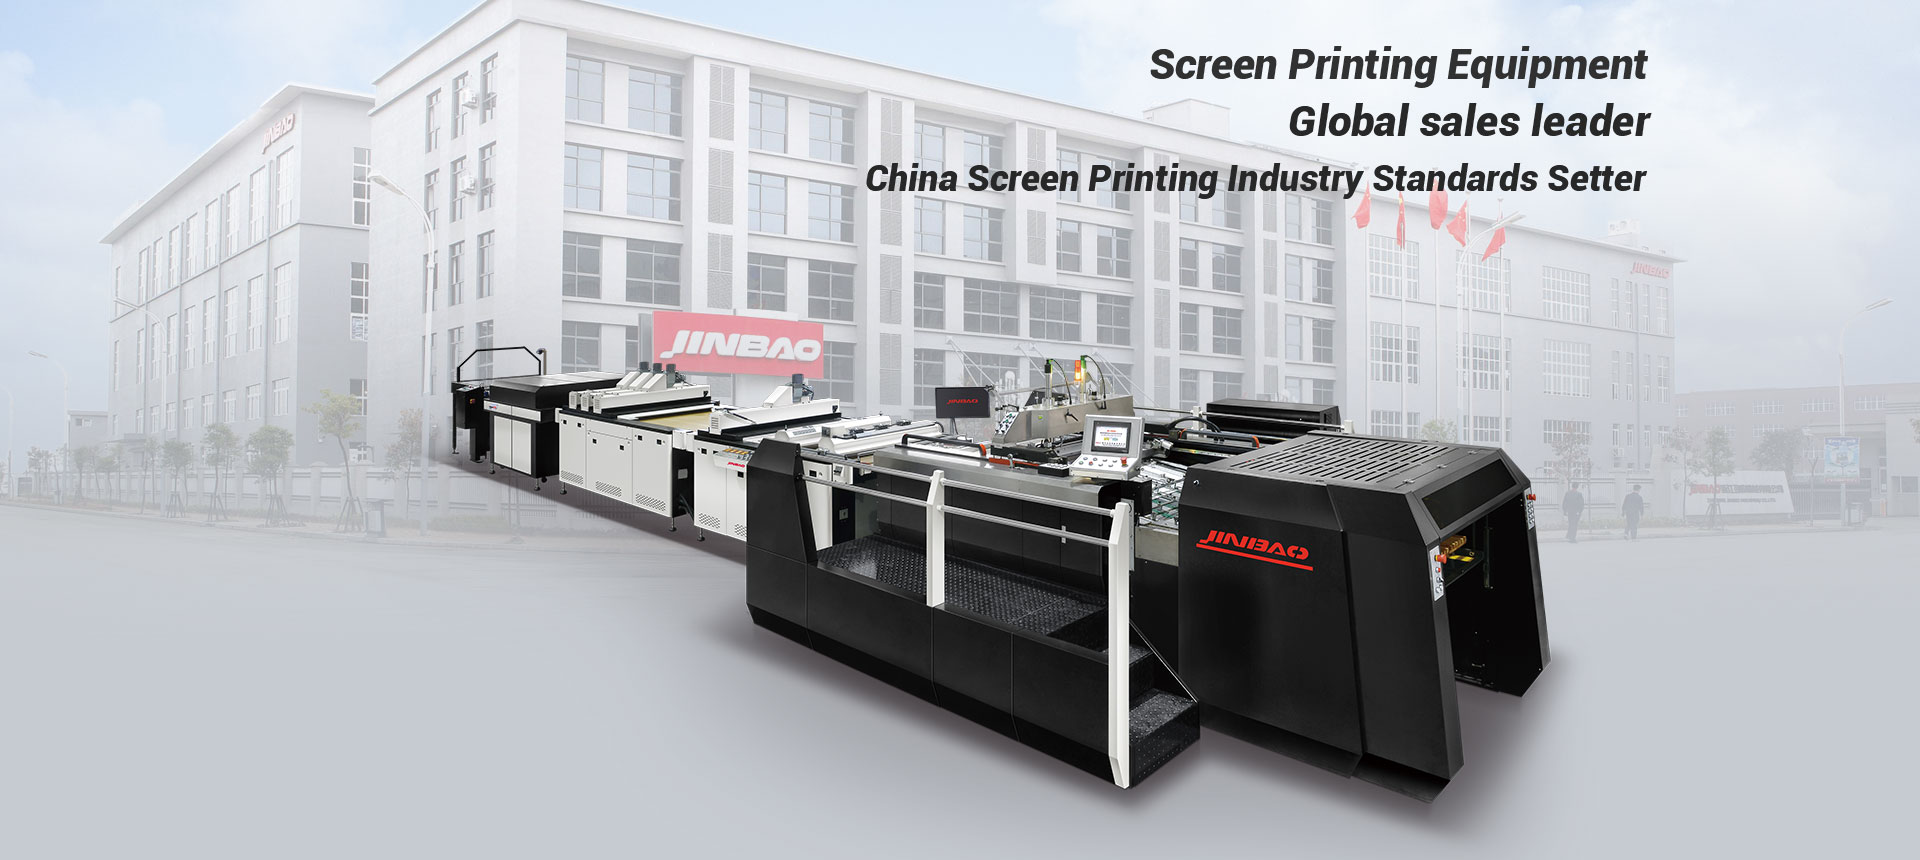 Screen Printing Equipment Global sales leader China Screen Printing Industry Standards Setter